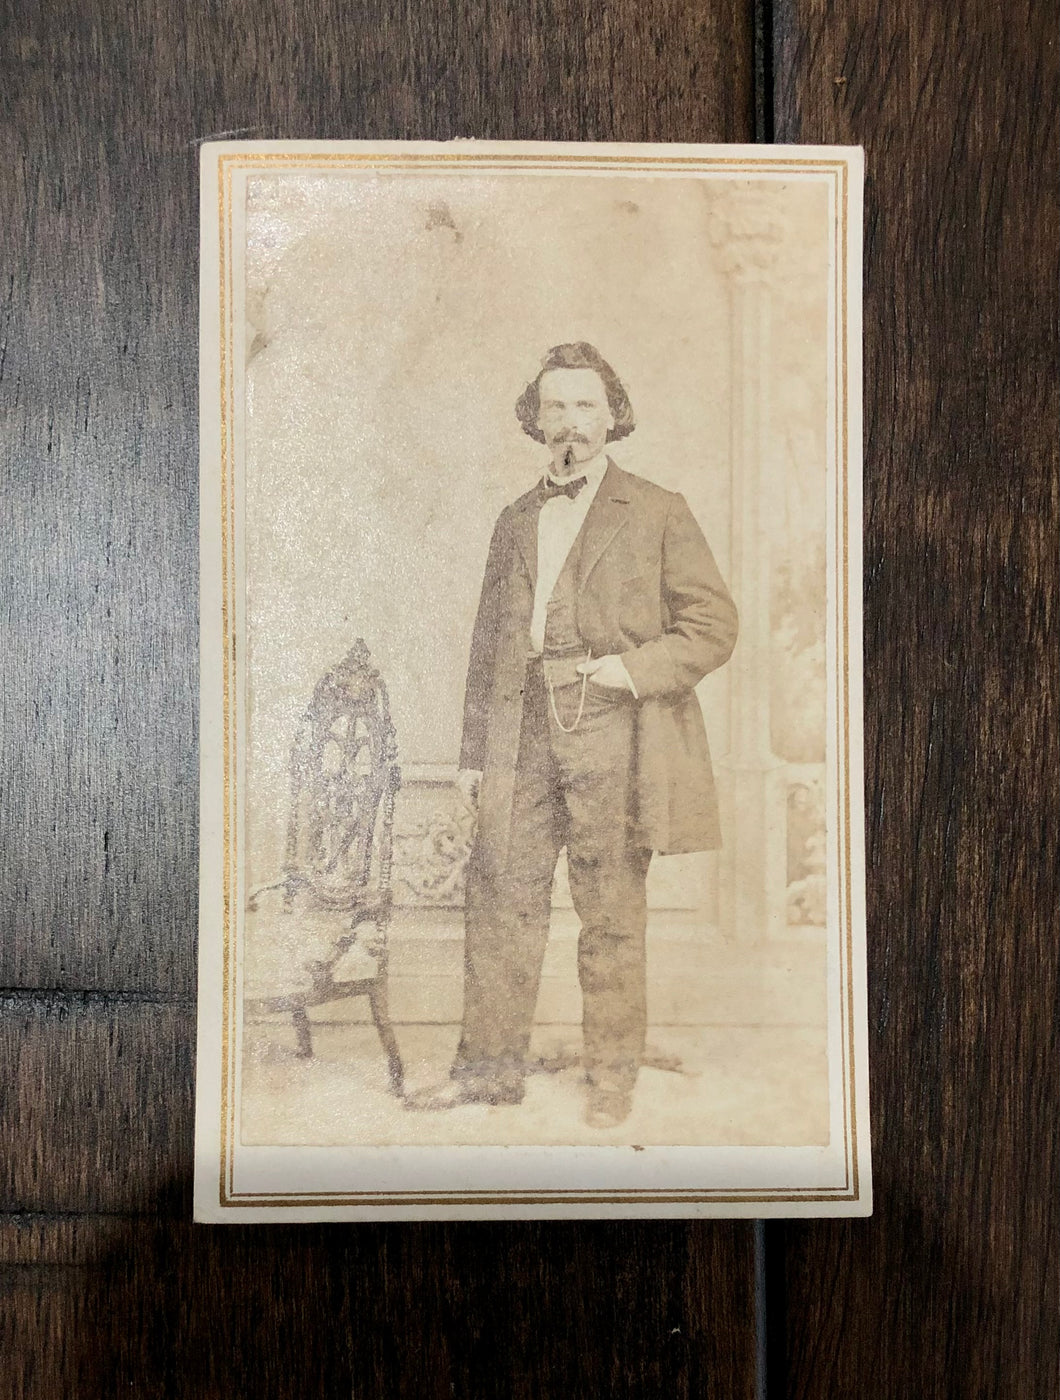 1860s CDV Photo of St. Louis Missouri Photographer Julius Gross